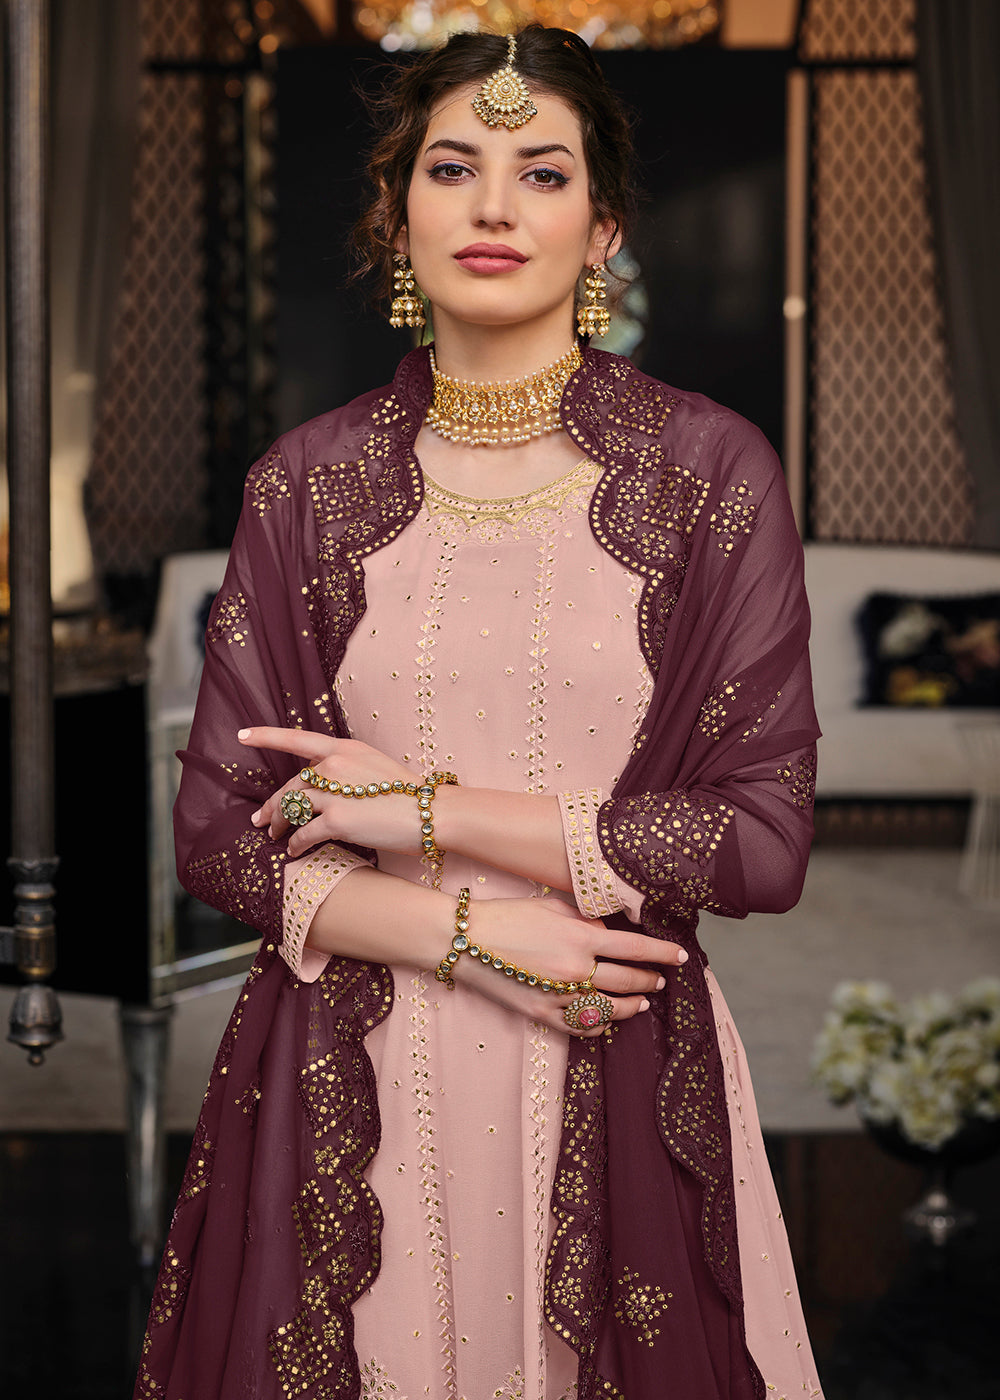 Buy Now Punjabi Style Intricate Pink Wedding Palazzo Suit Online in UK at Empress Clothing.